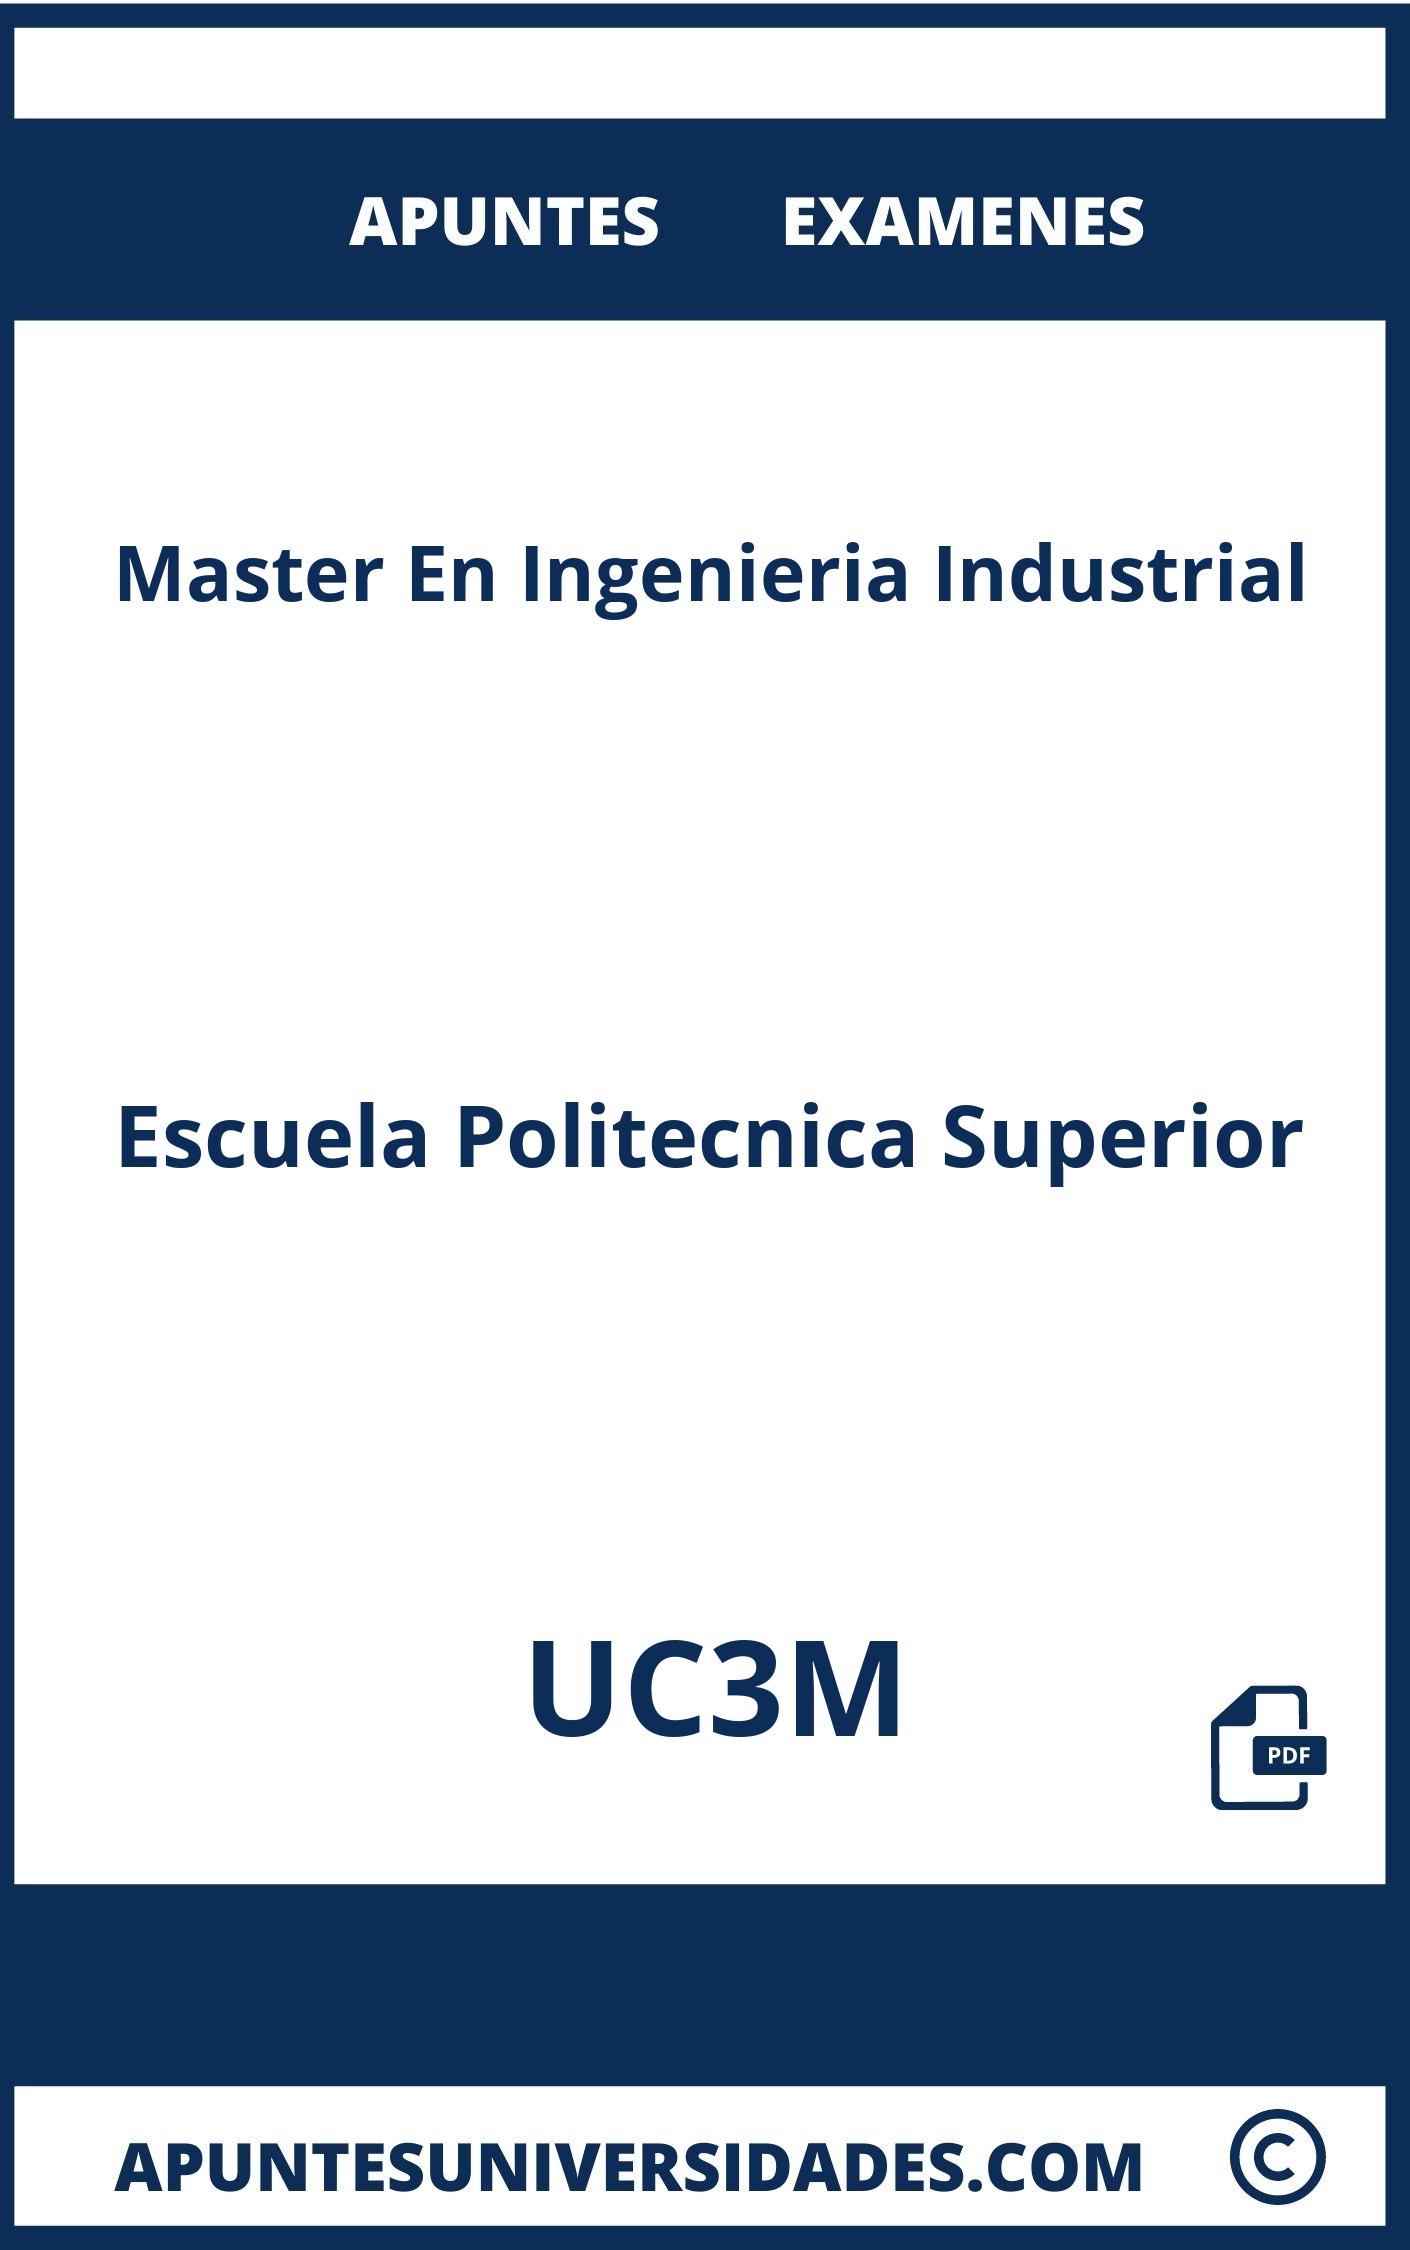 Master En Ingenieria Industrial UC3M Examenes Apuntes